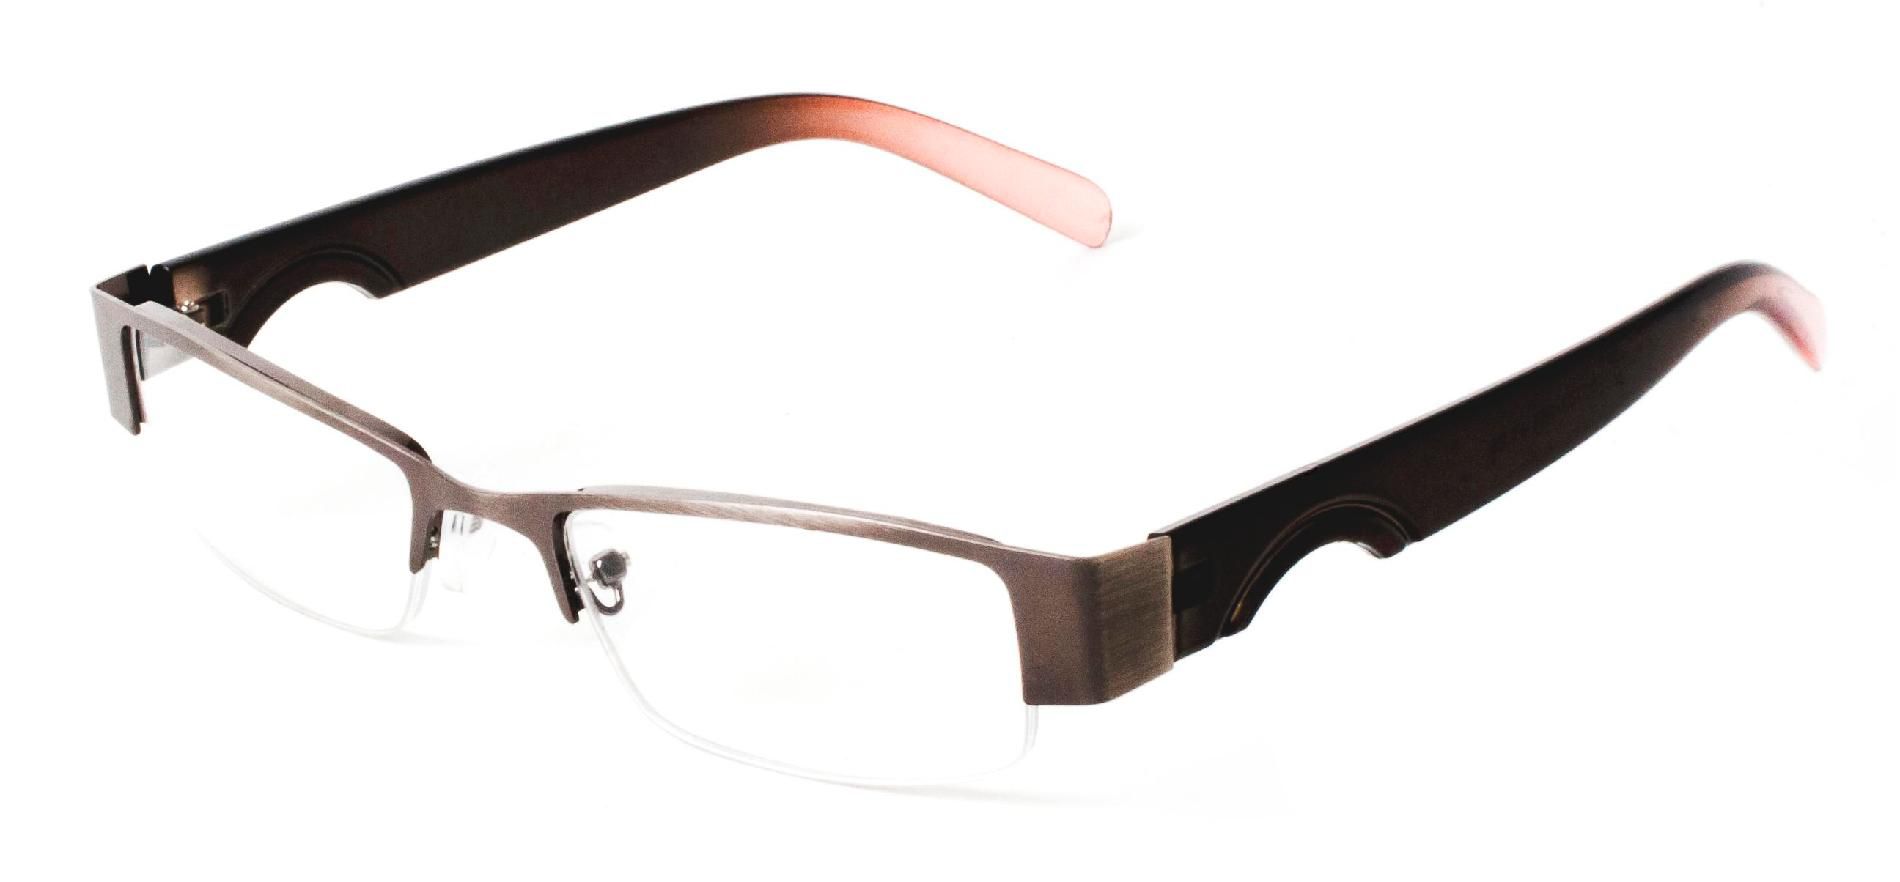 Reading Glasses: Buy Reading Glasses in Health & Wellness at Kmart